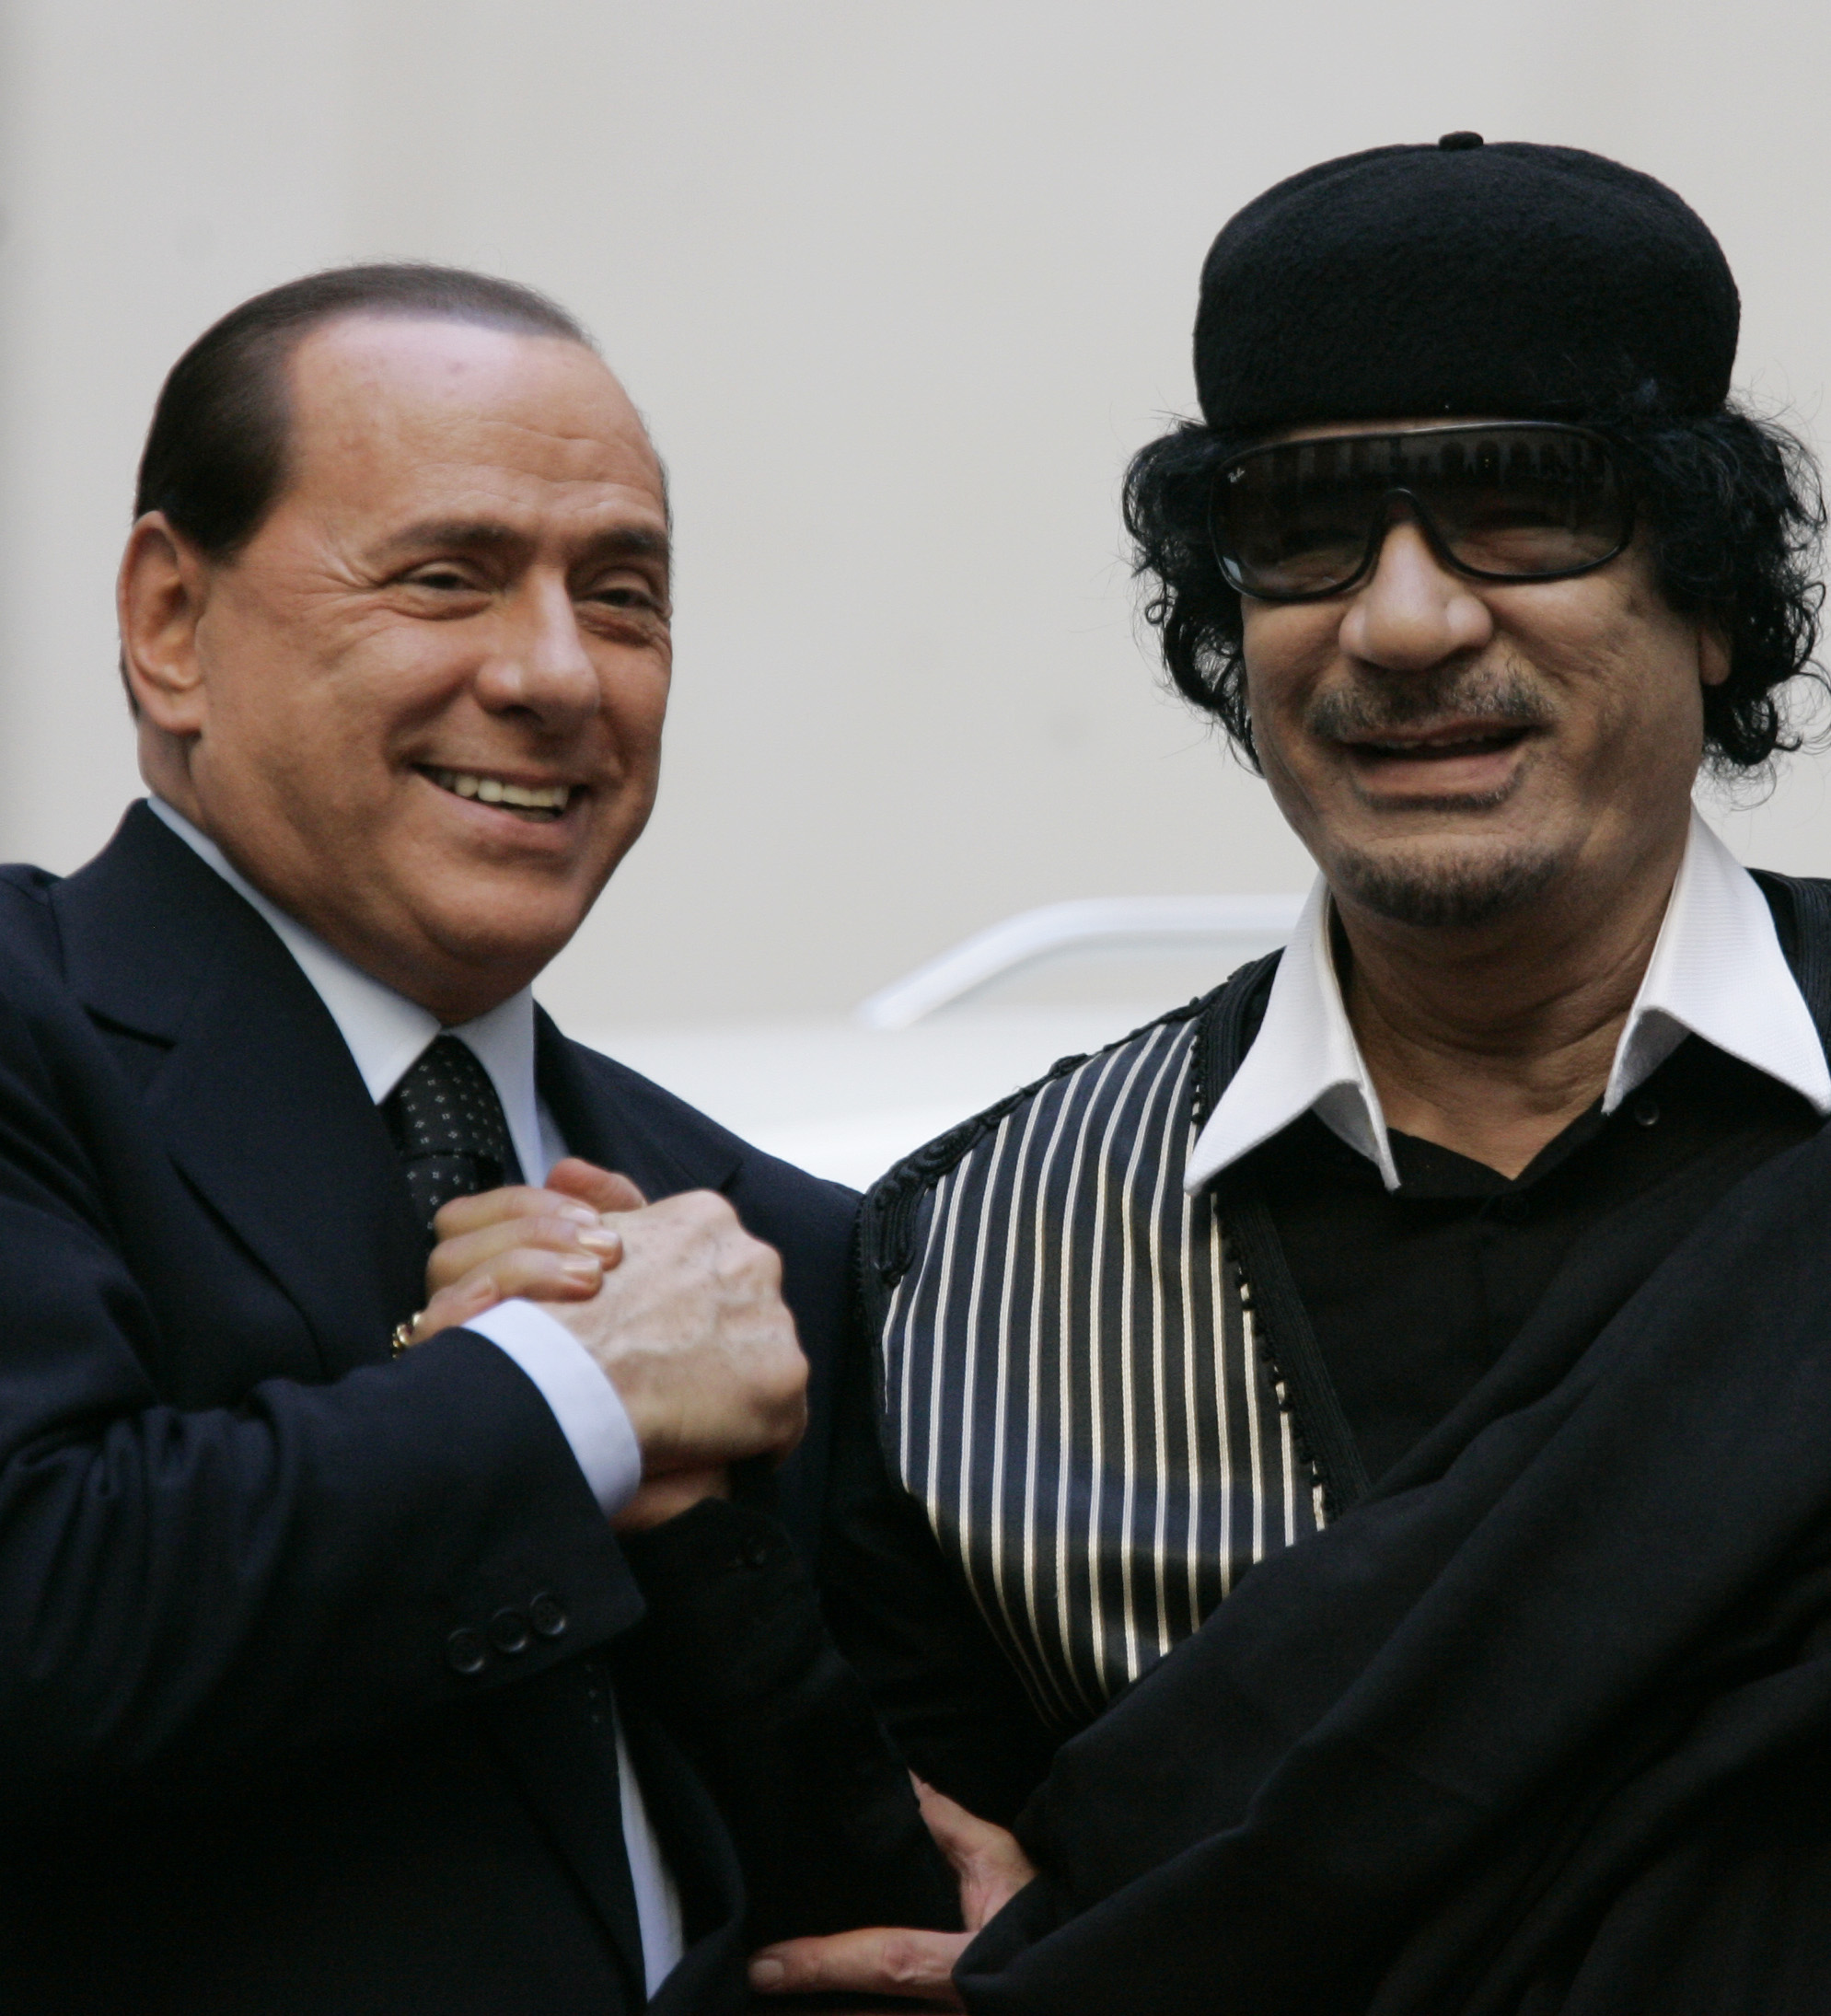 Good times, Berlusconi och Khadaffi.